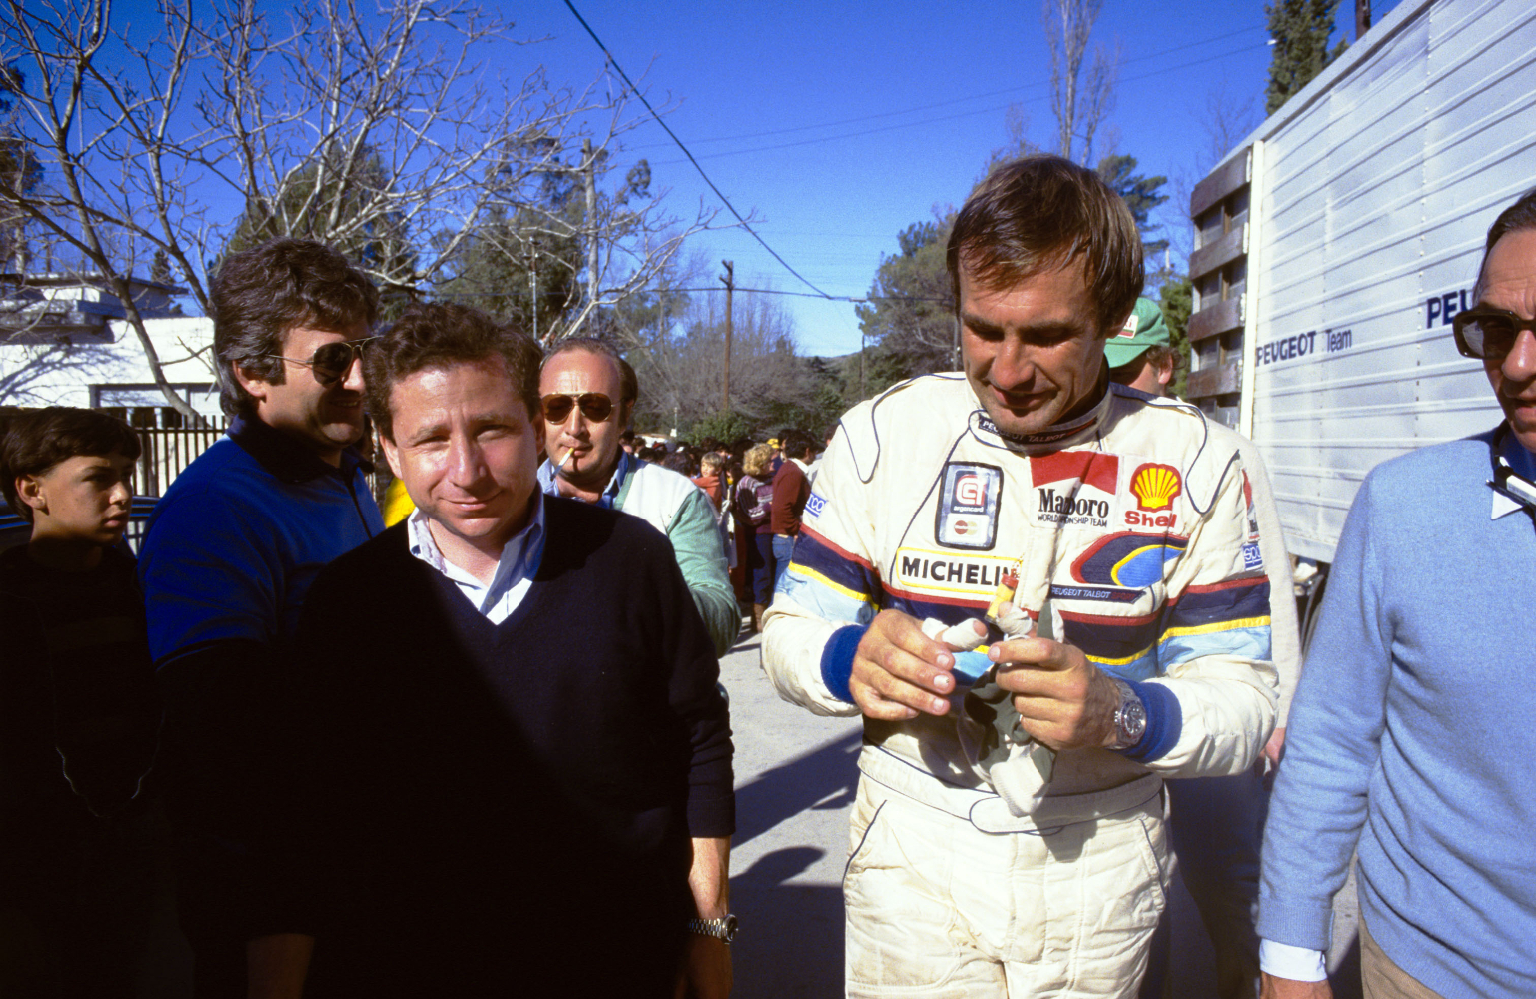 046 - WRC 1985. Argentine. Carlos Reutemann et Jean Todt. Ambiance